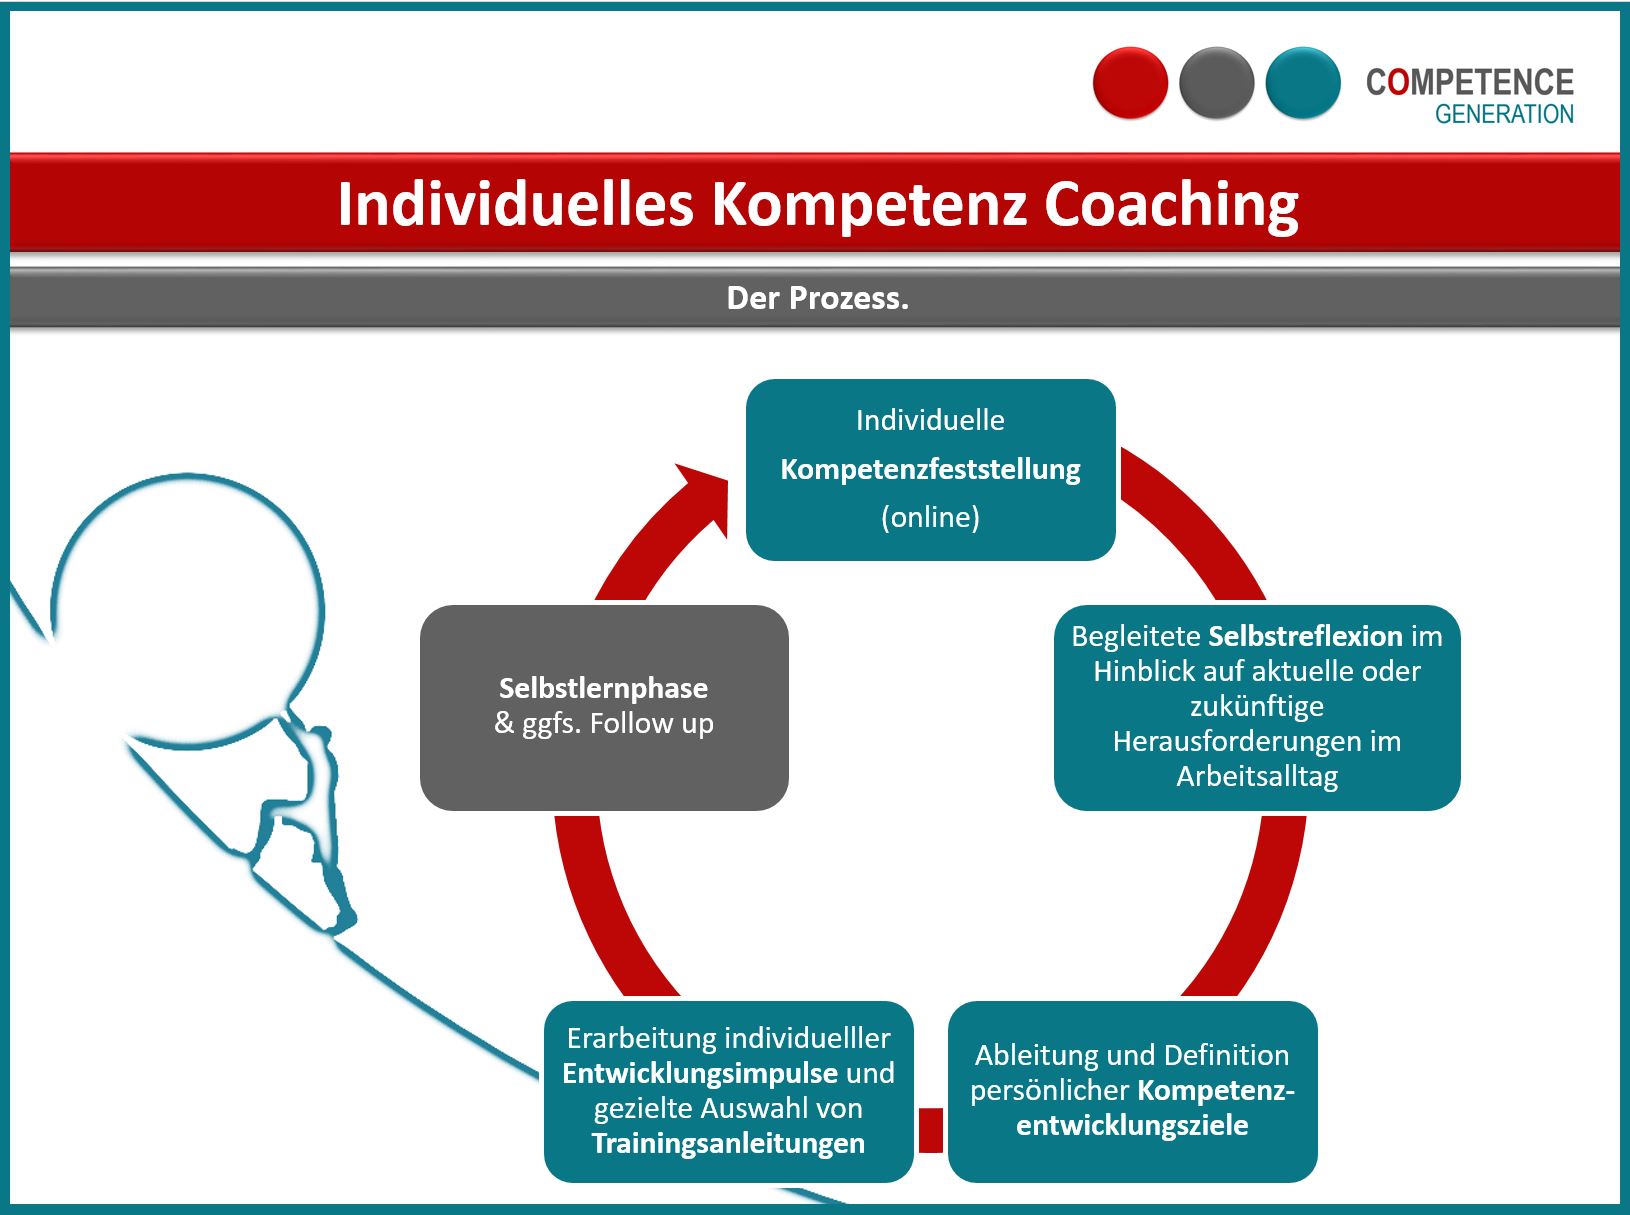 Individuelles Kompetenz Coaching